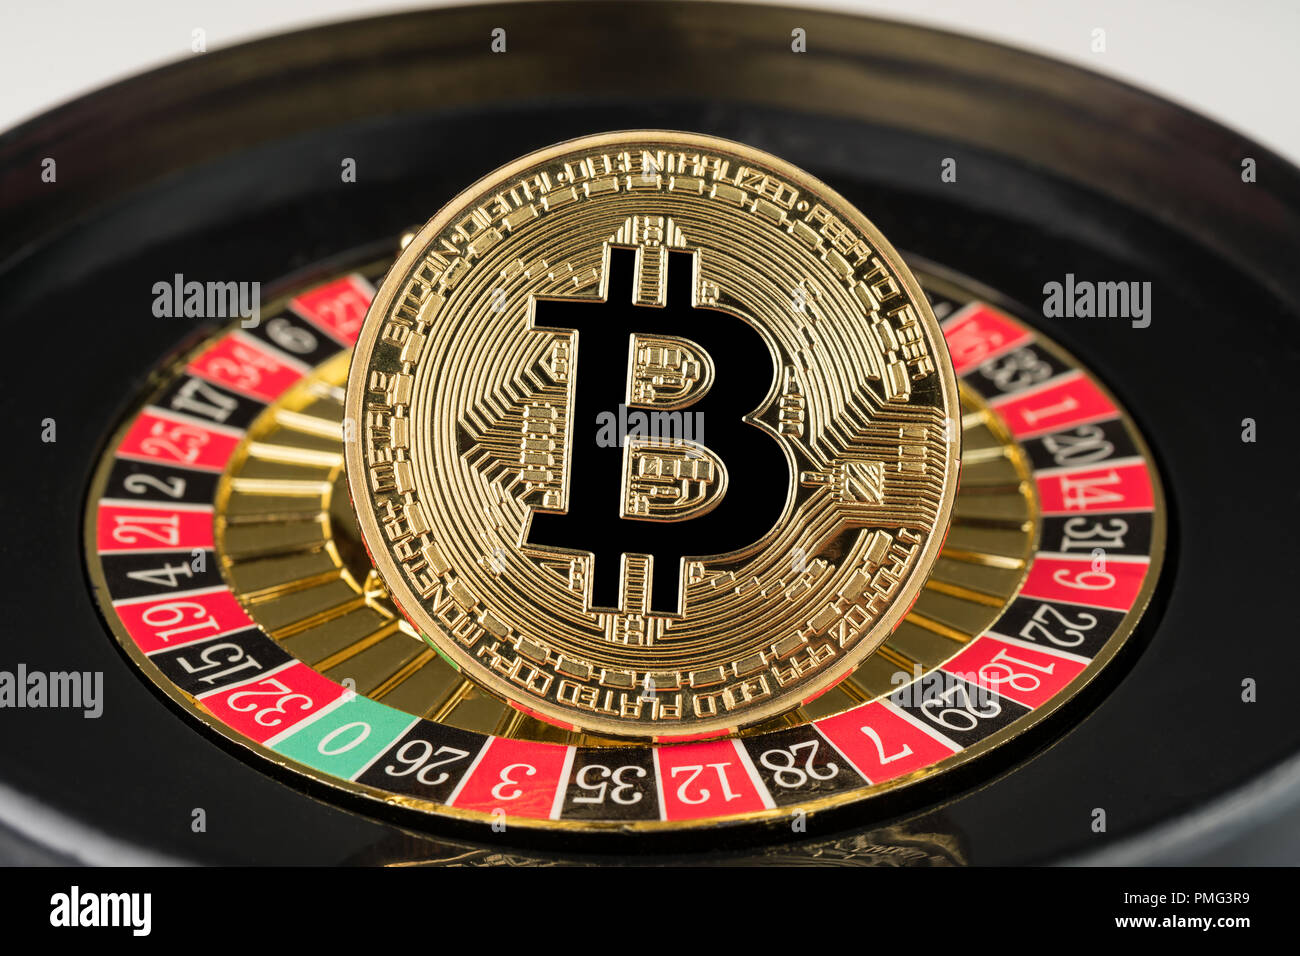 The Evolution Of bitcoin casino